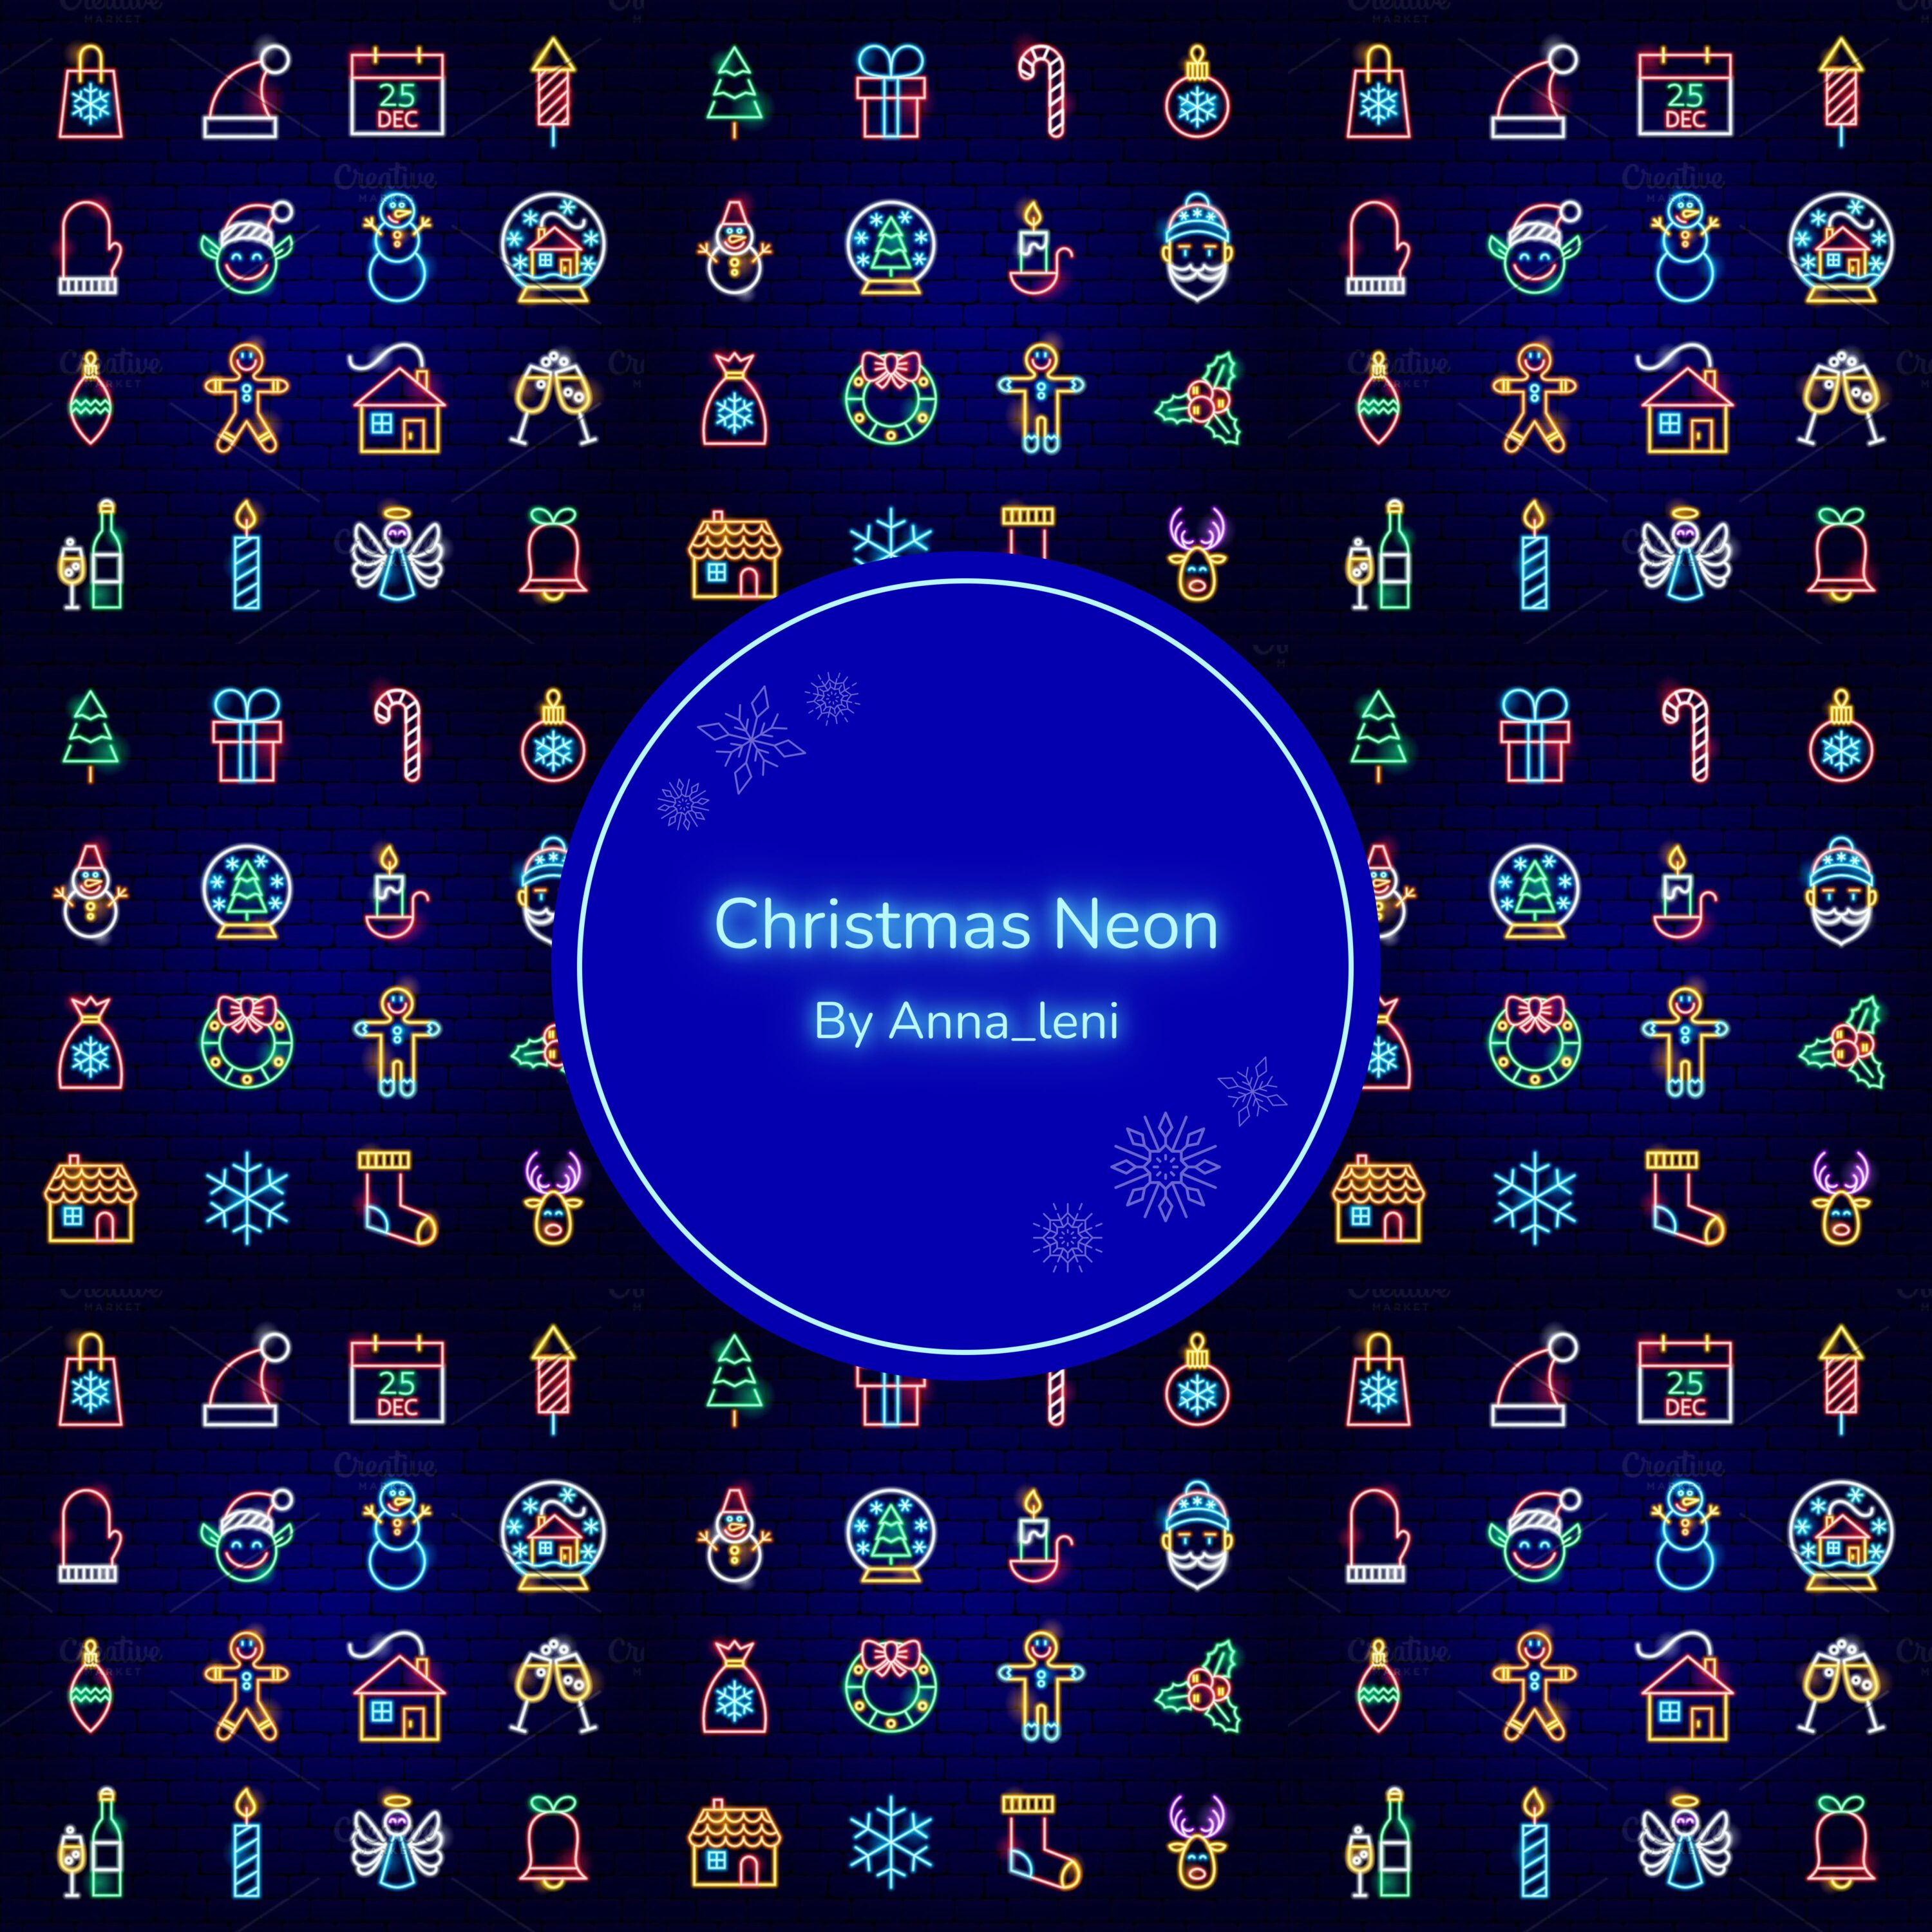 Christmas Neon cover.